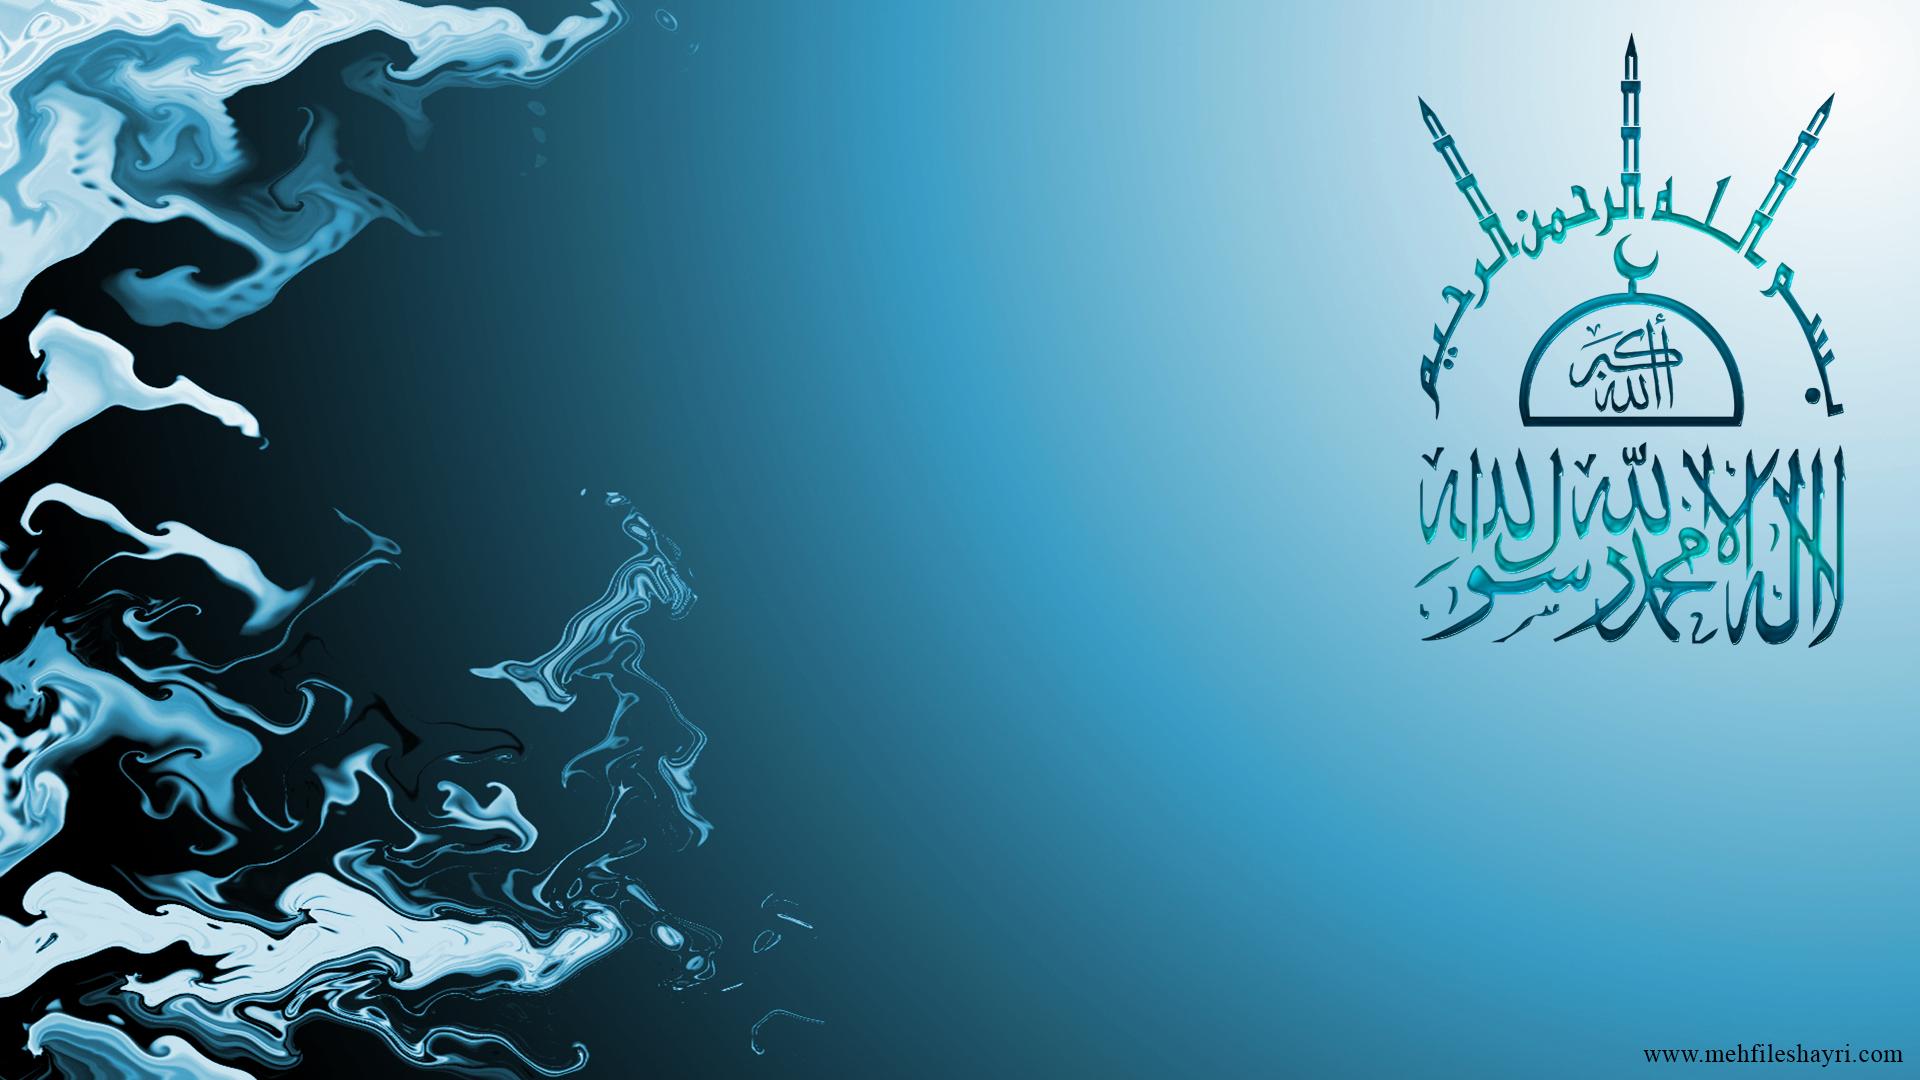 islamic flag wallpaper hd download,font,graphic design,text,design,illustration